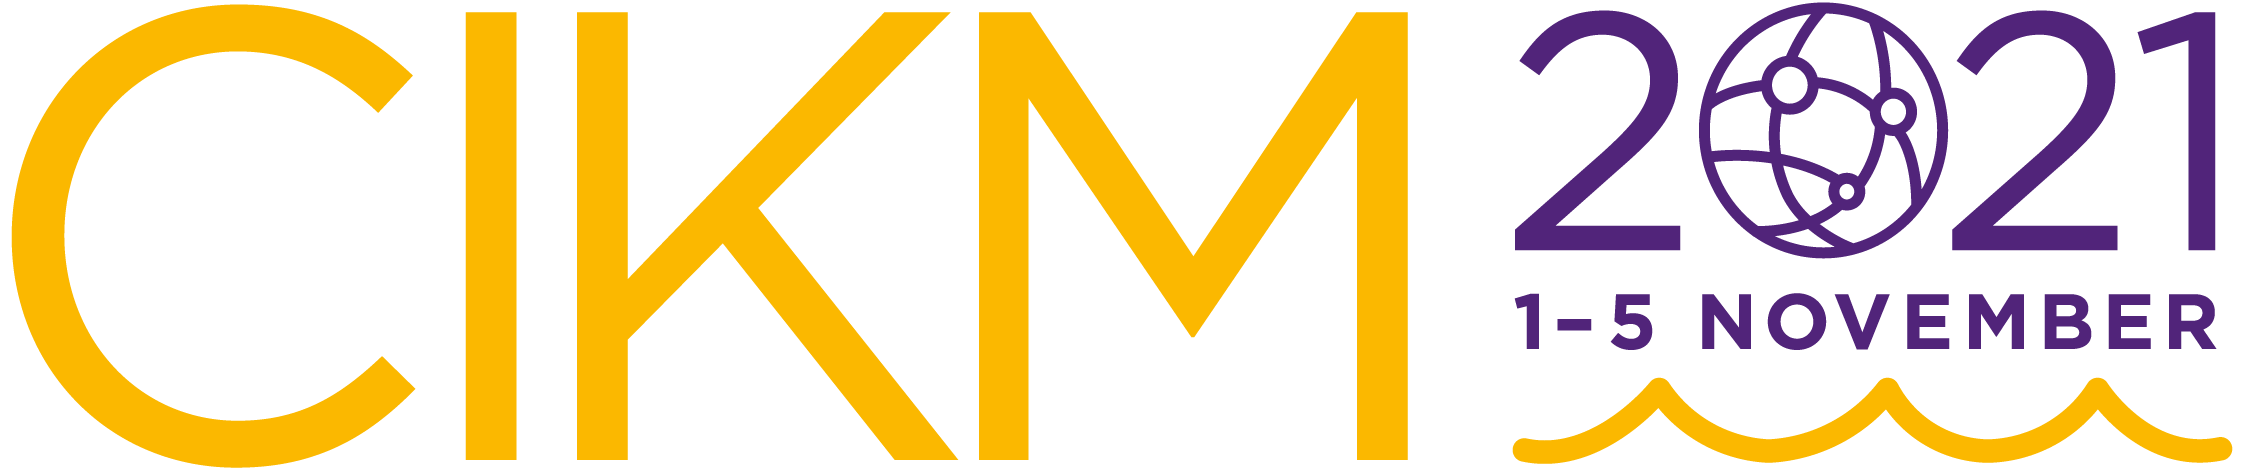 CIKM Logo, with dates coloured purple.